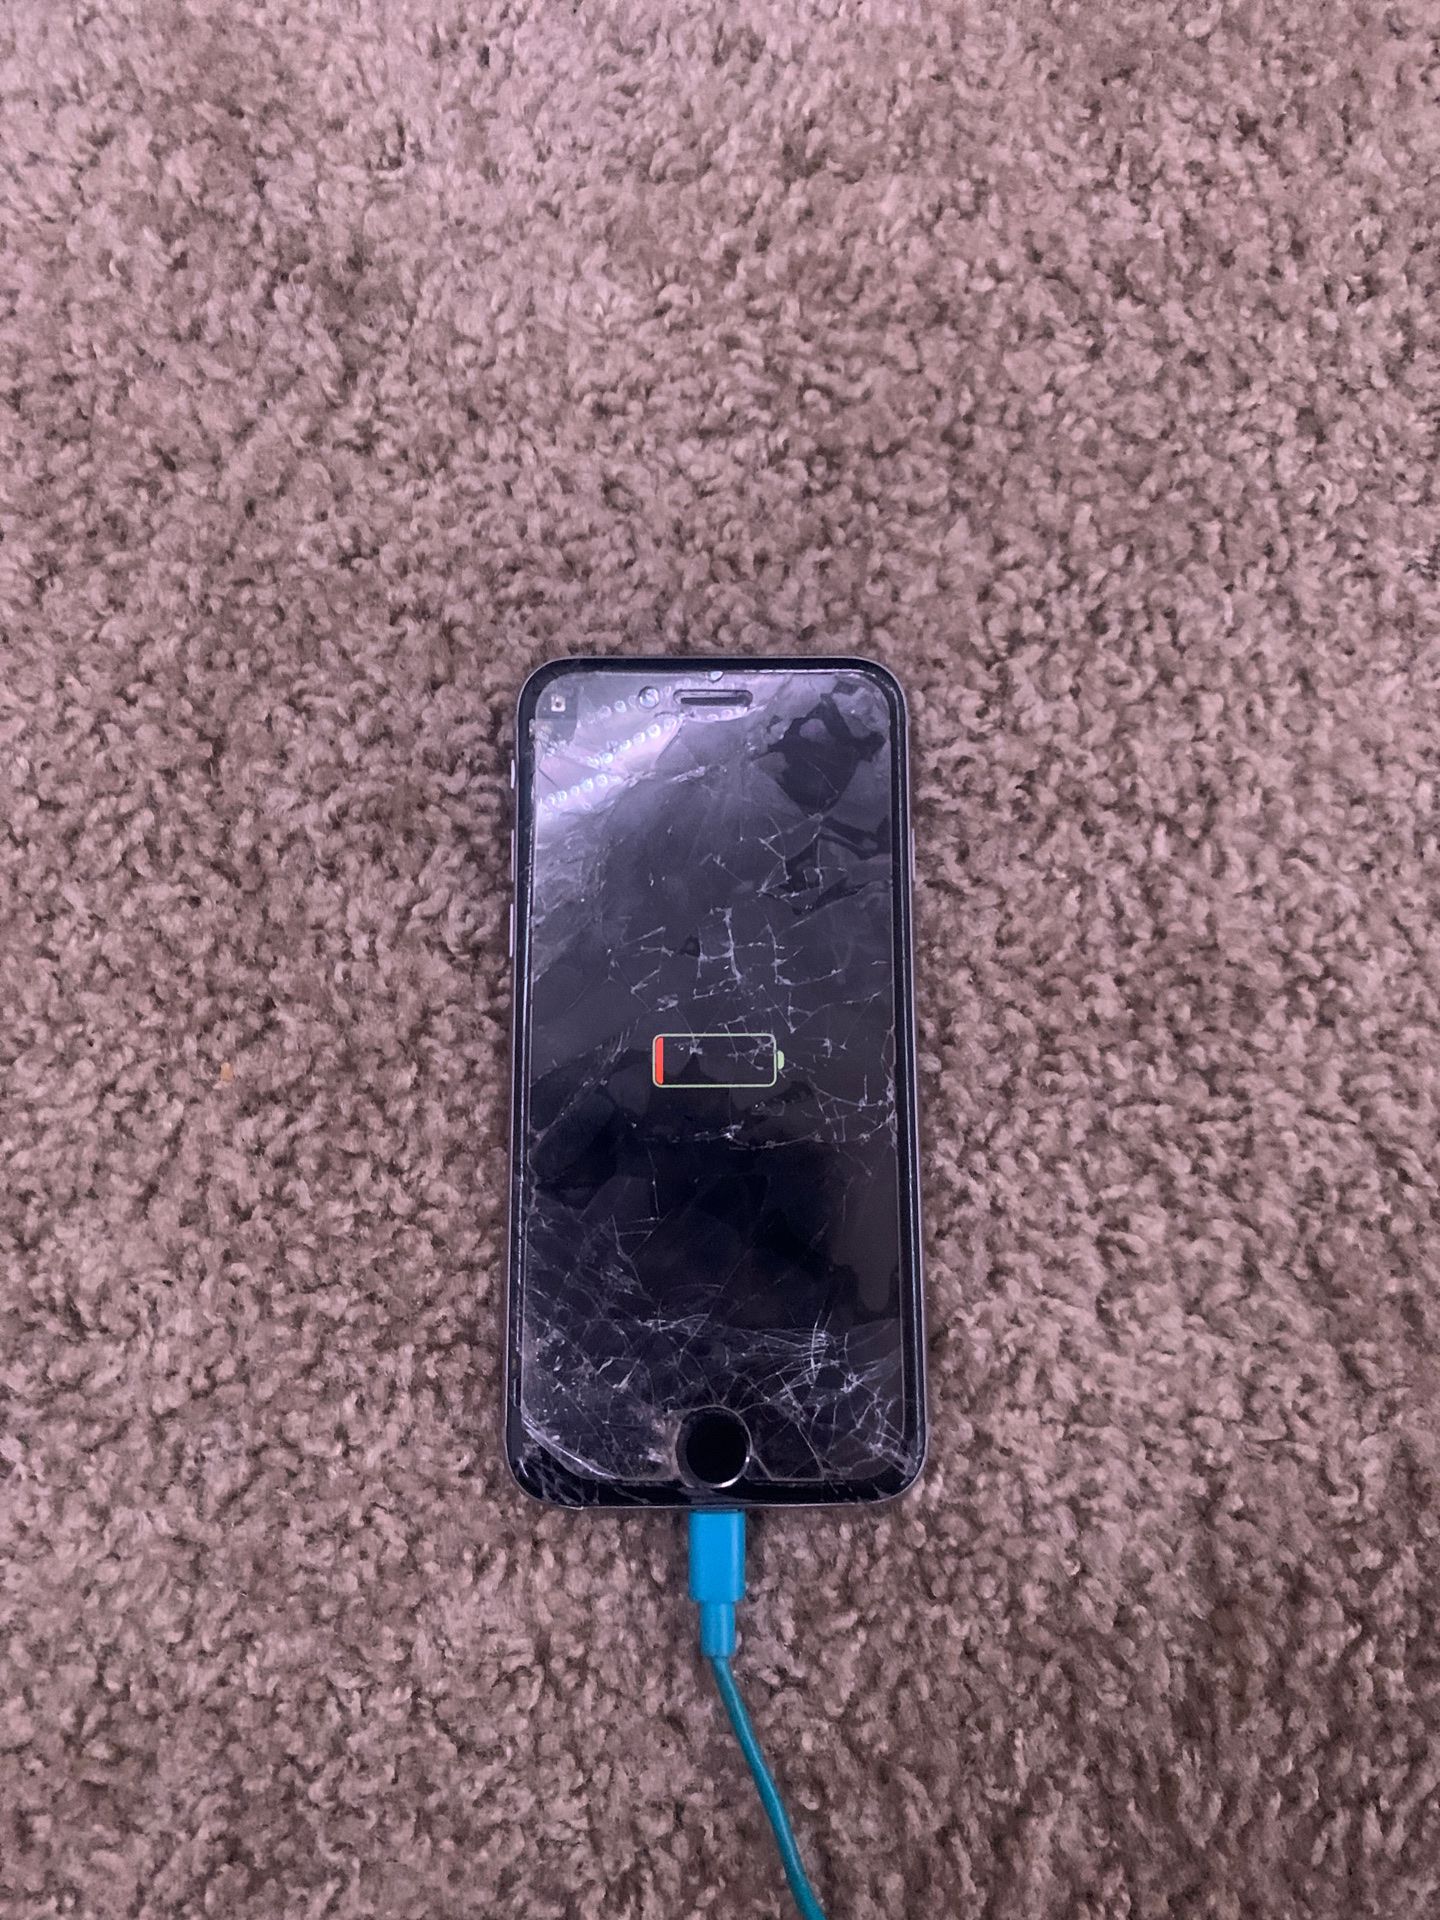 iPhone 6 broken (Verizon compatible)